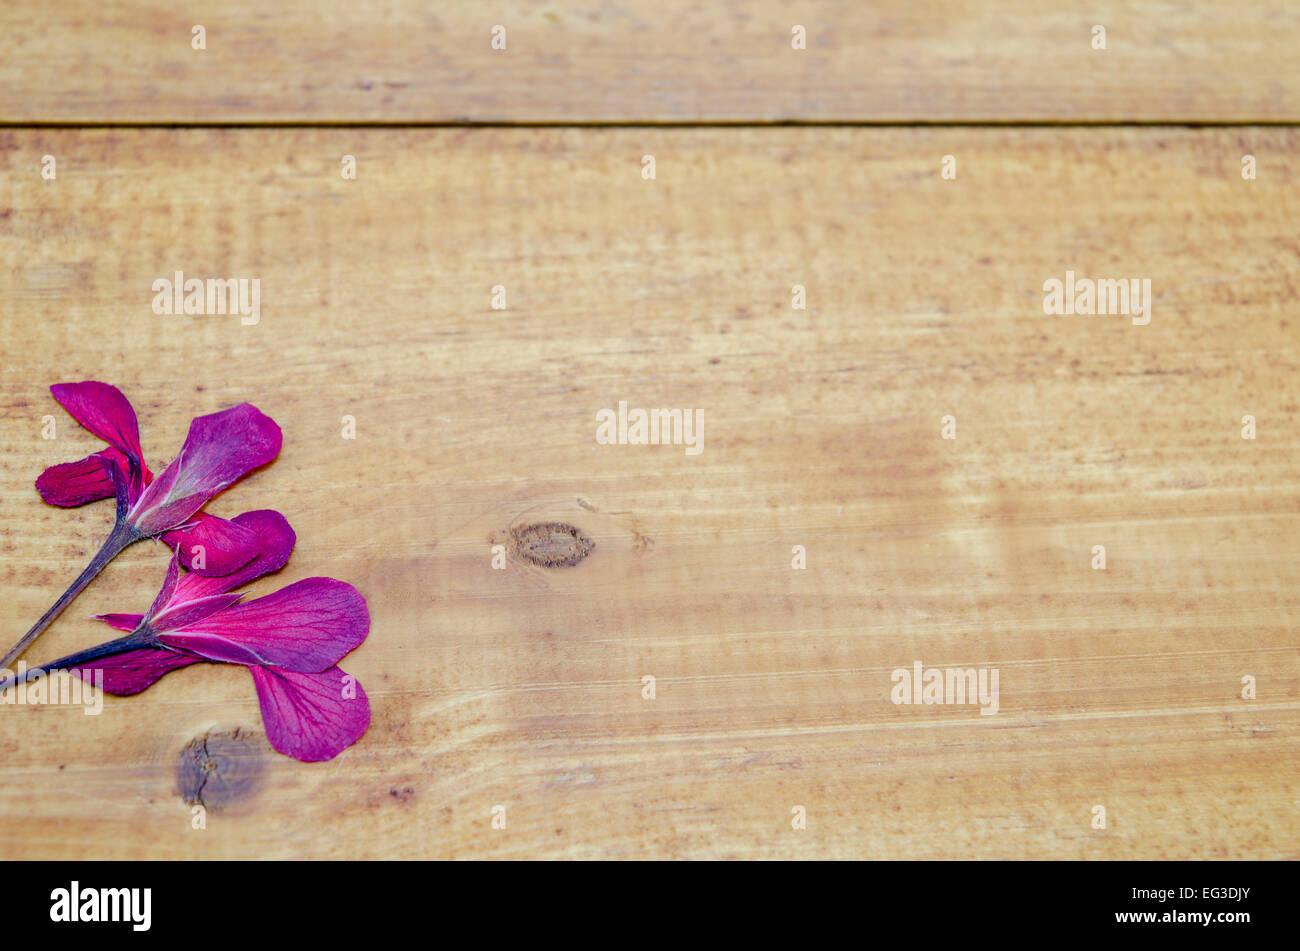 Flor rosa secos en la esquina inferior izquierda de una mesa de madera Foto de stock